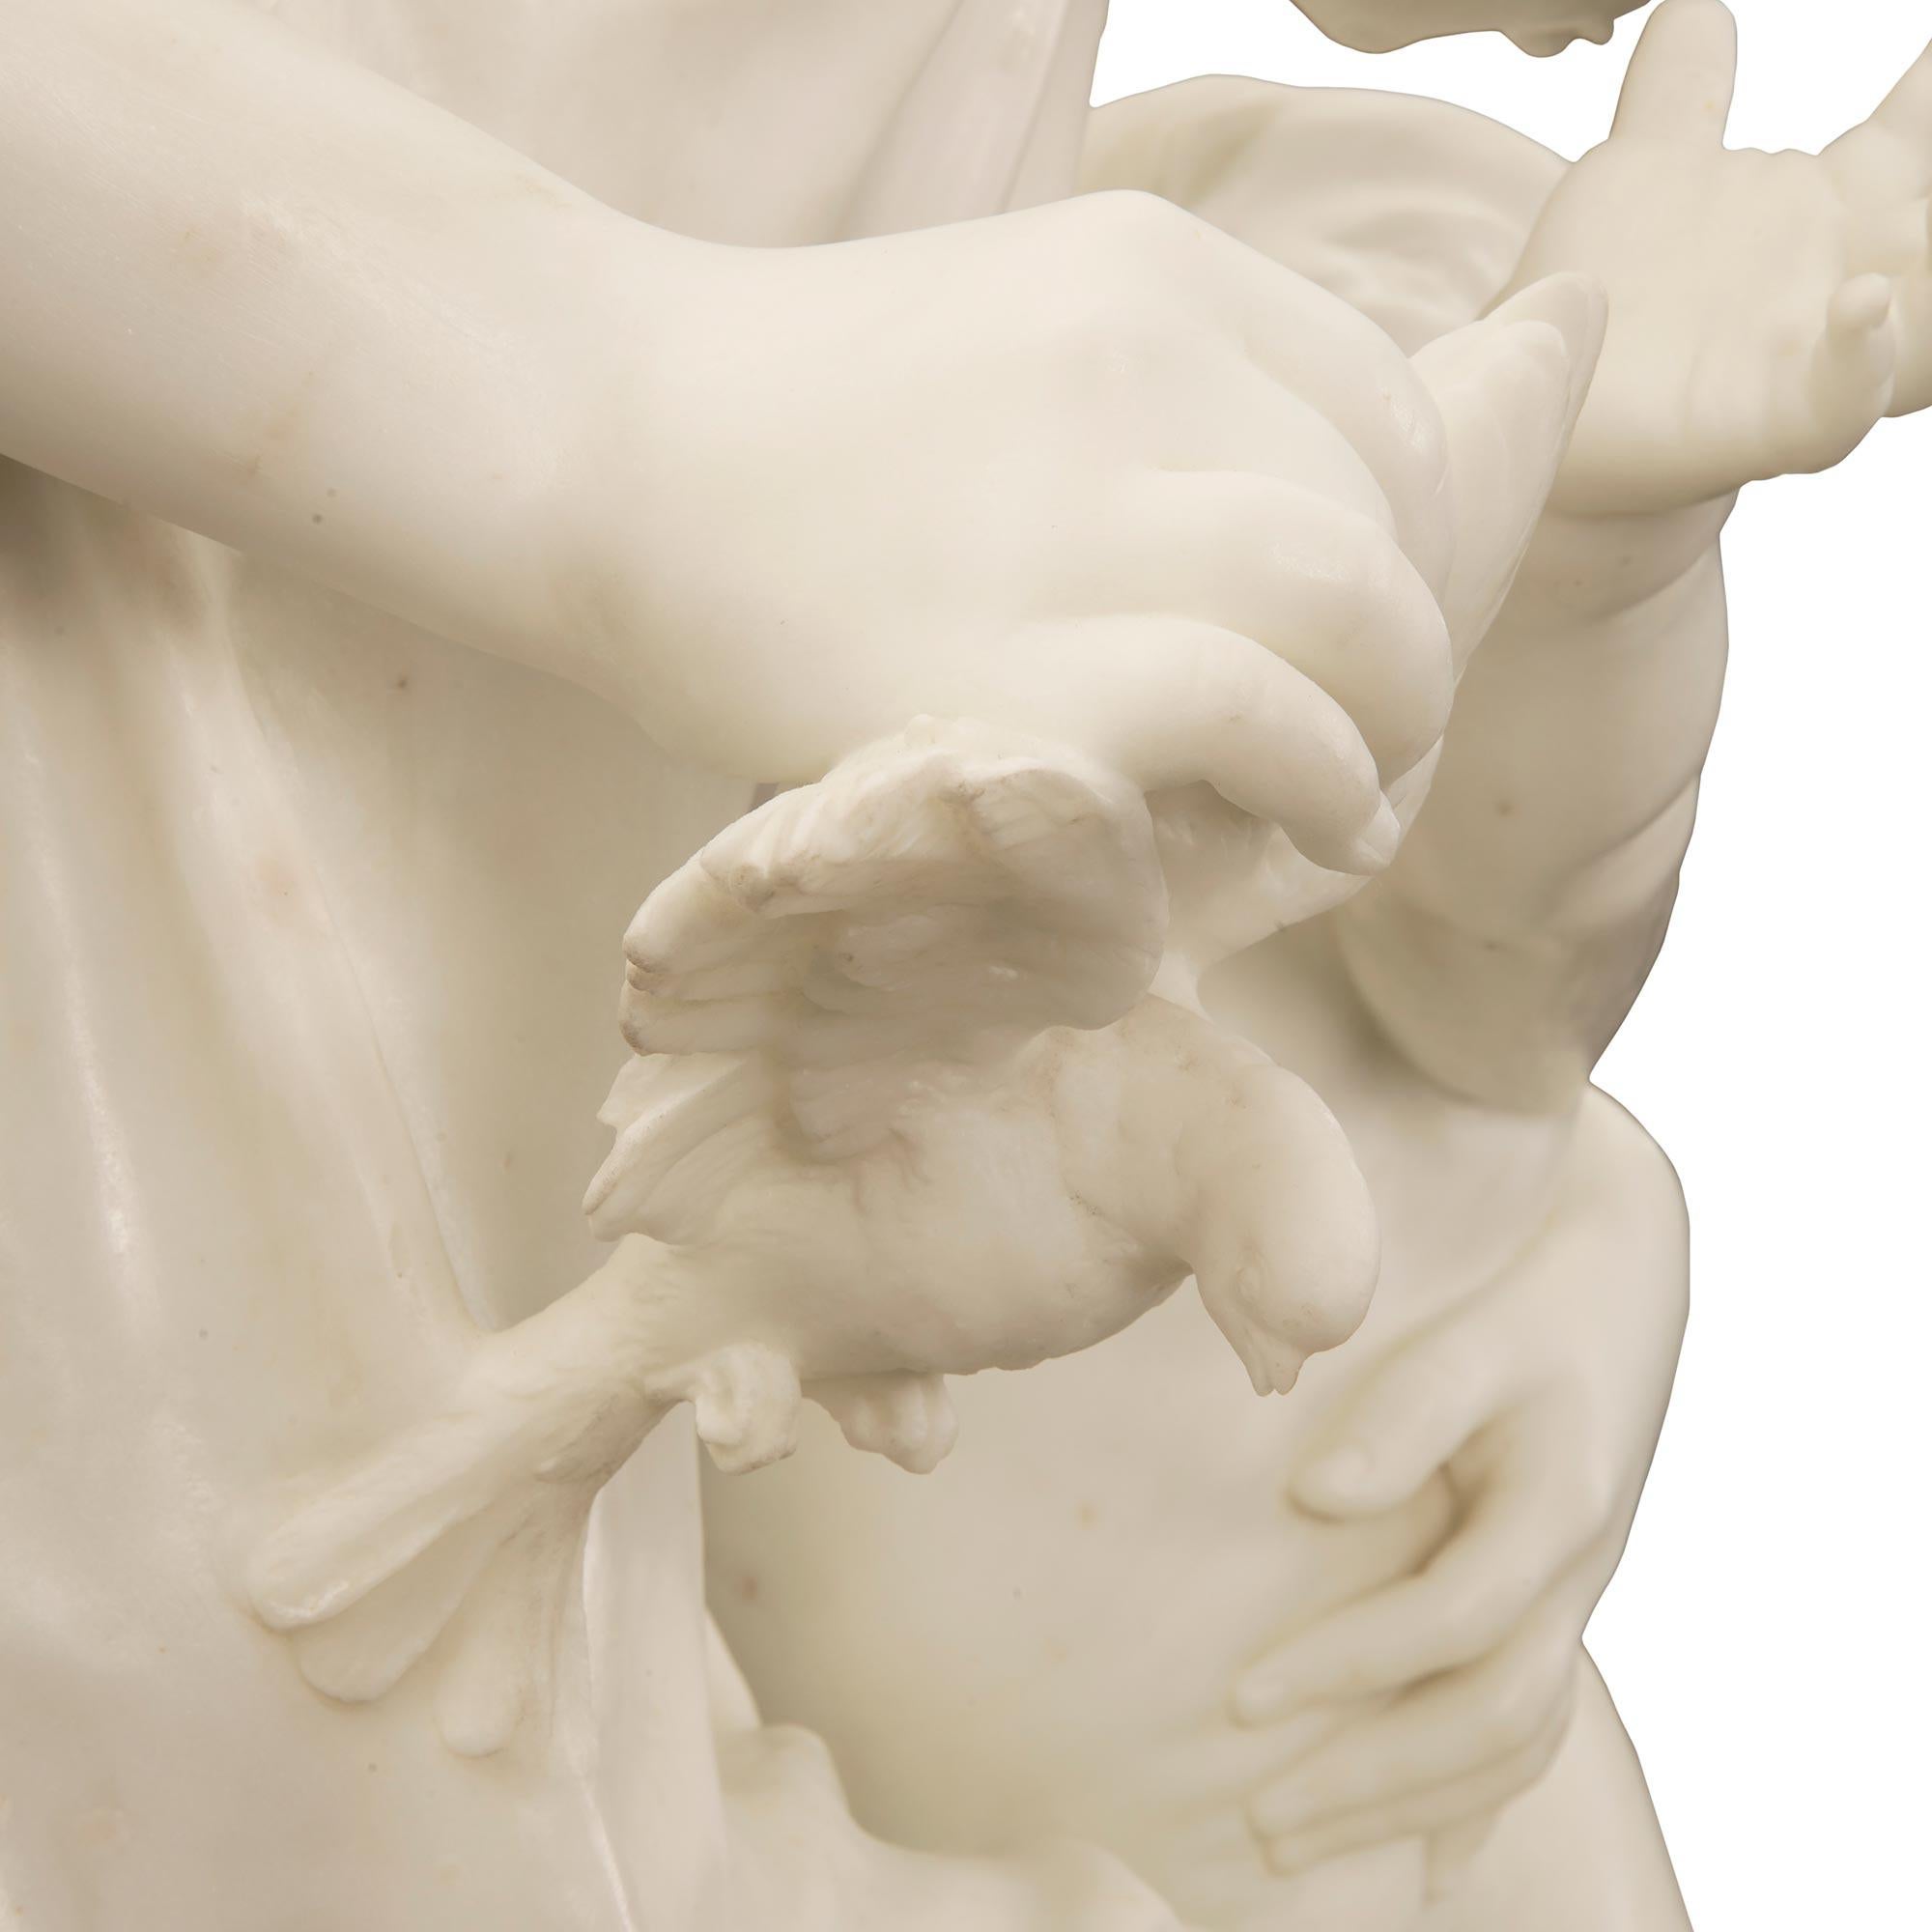 Italian 19th Century White Carrara Marble Statue on Its Original Swivel Pedestal For Sale 4